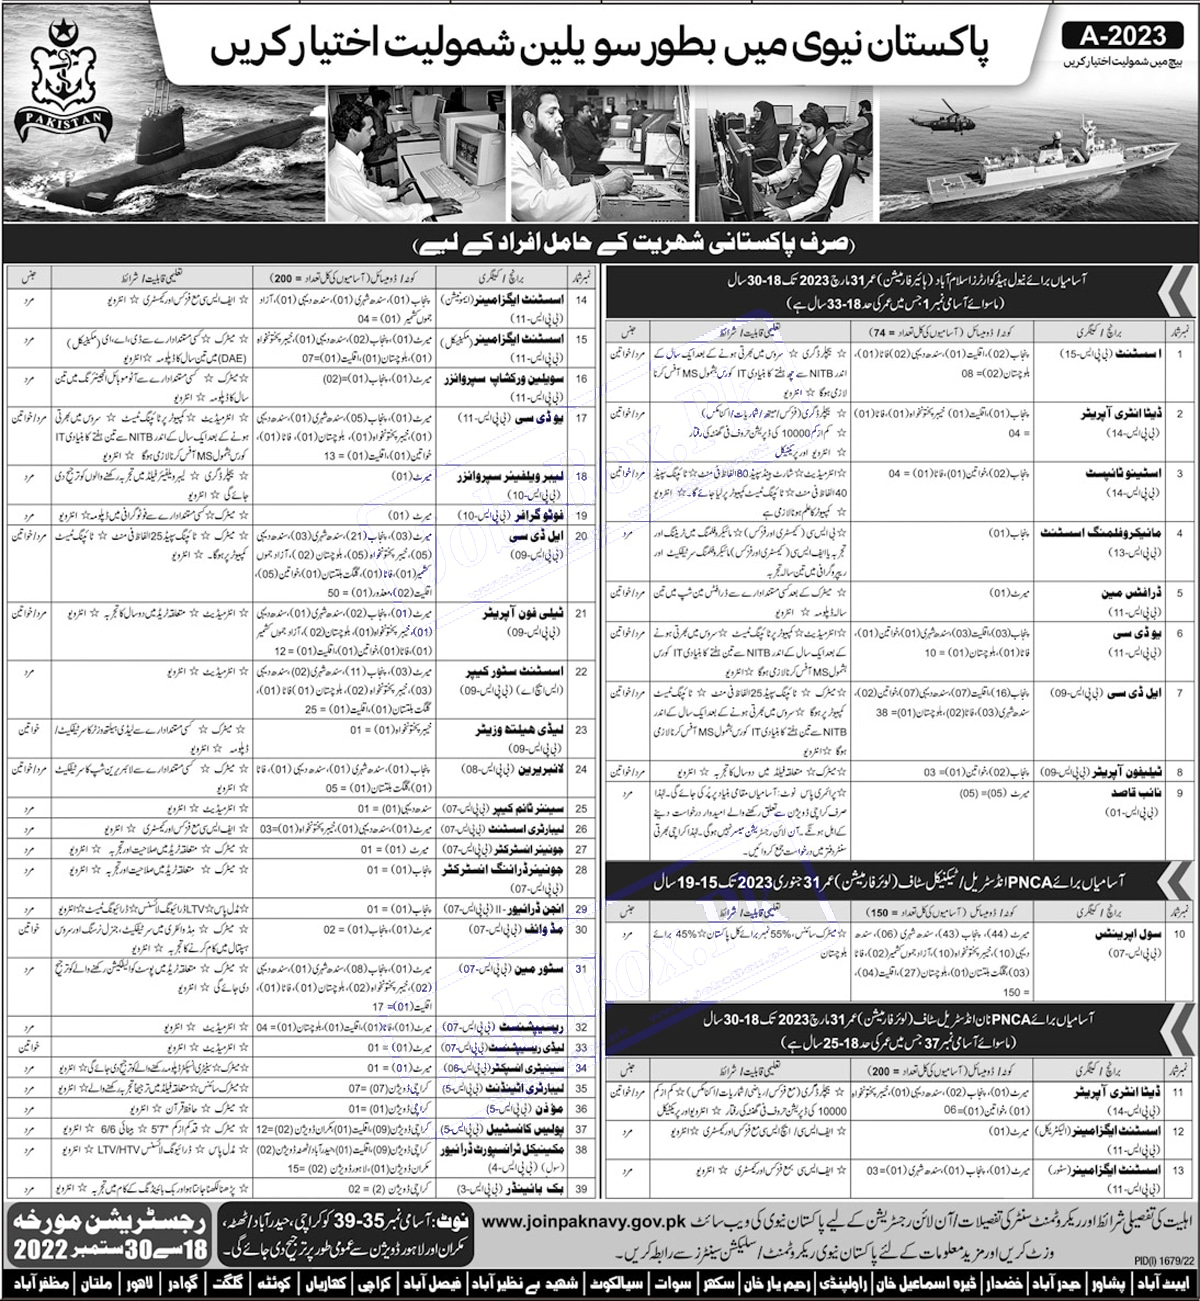 Join Pakistan Navy as Civilian BatchA-2023| Civilian Recruitment| Navy Jobs 2022